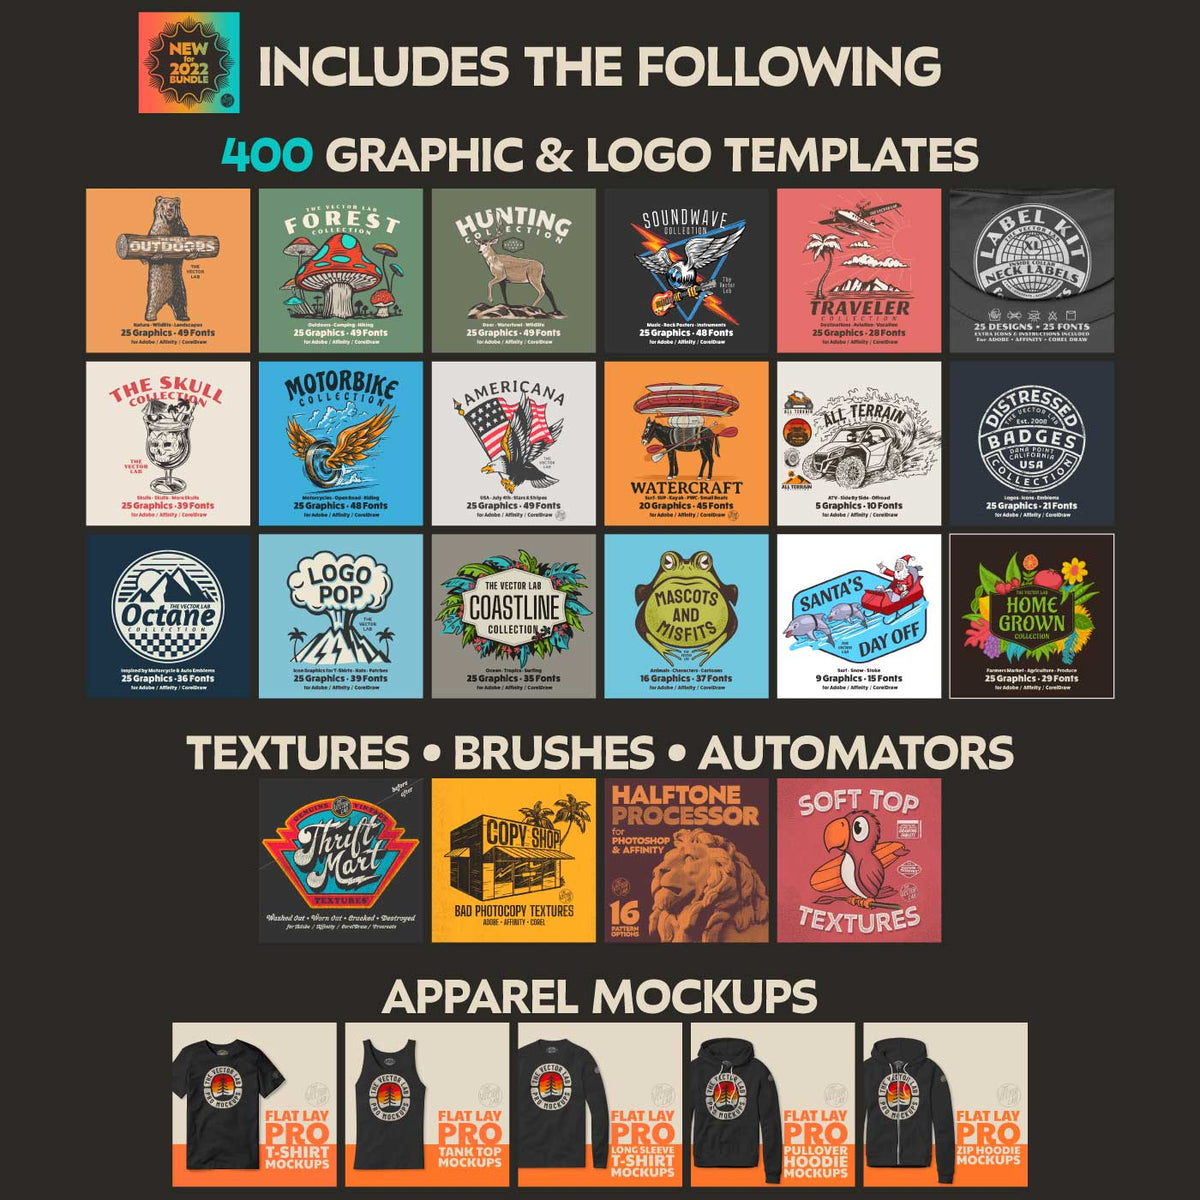 T-Shirt Design Bundle (XL) - TheVectorLab